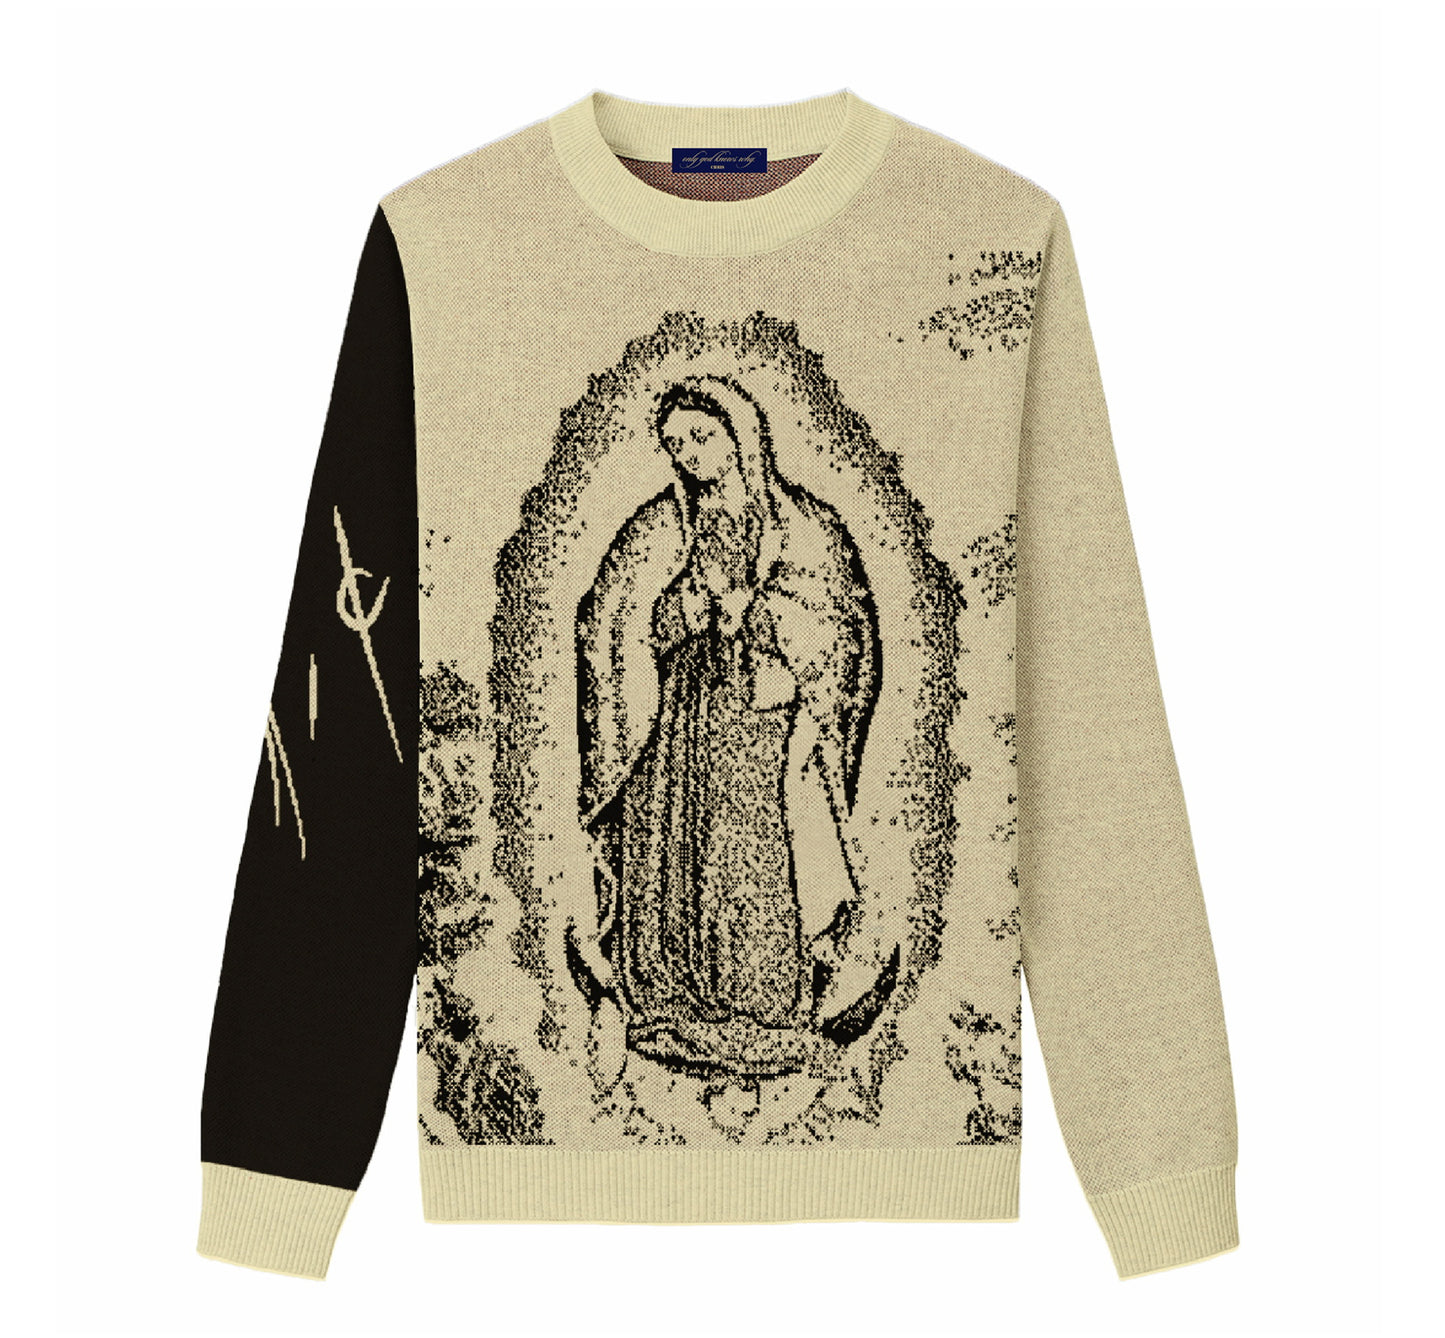 Virgin Mary garment